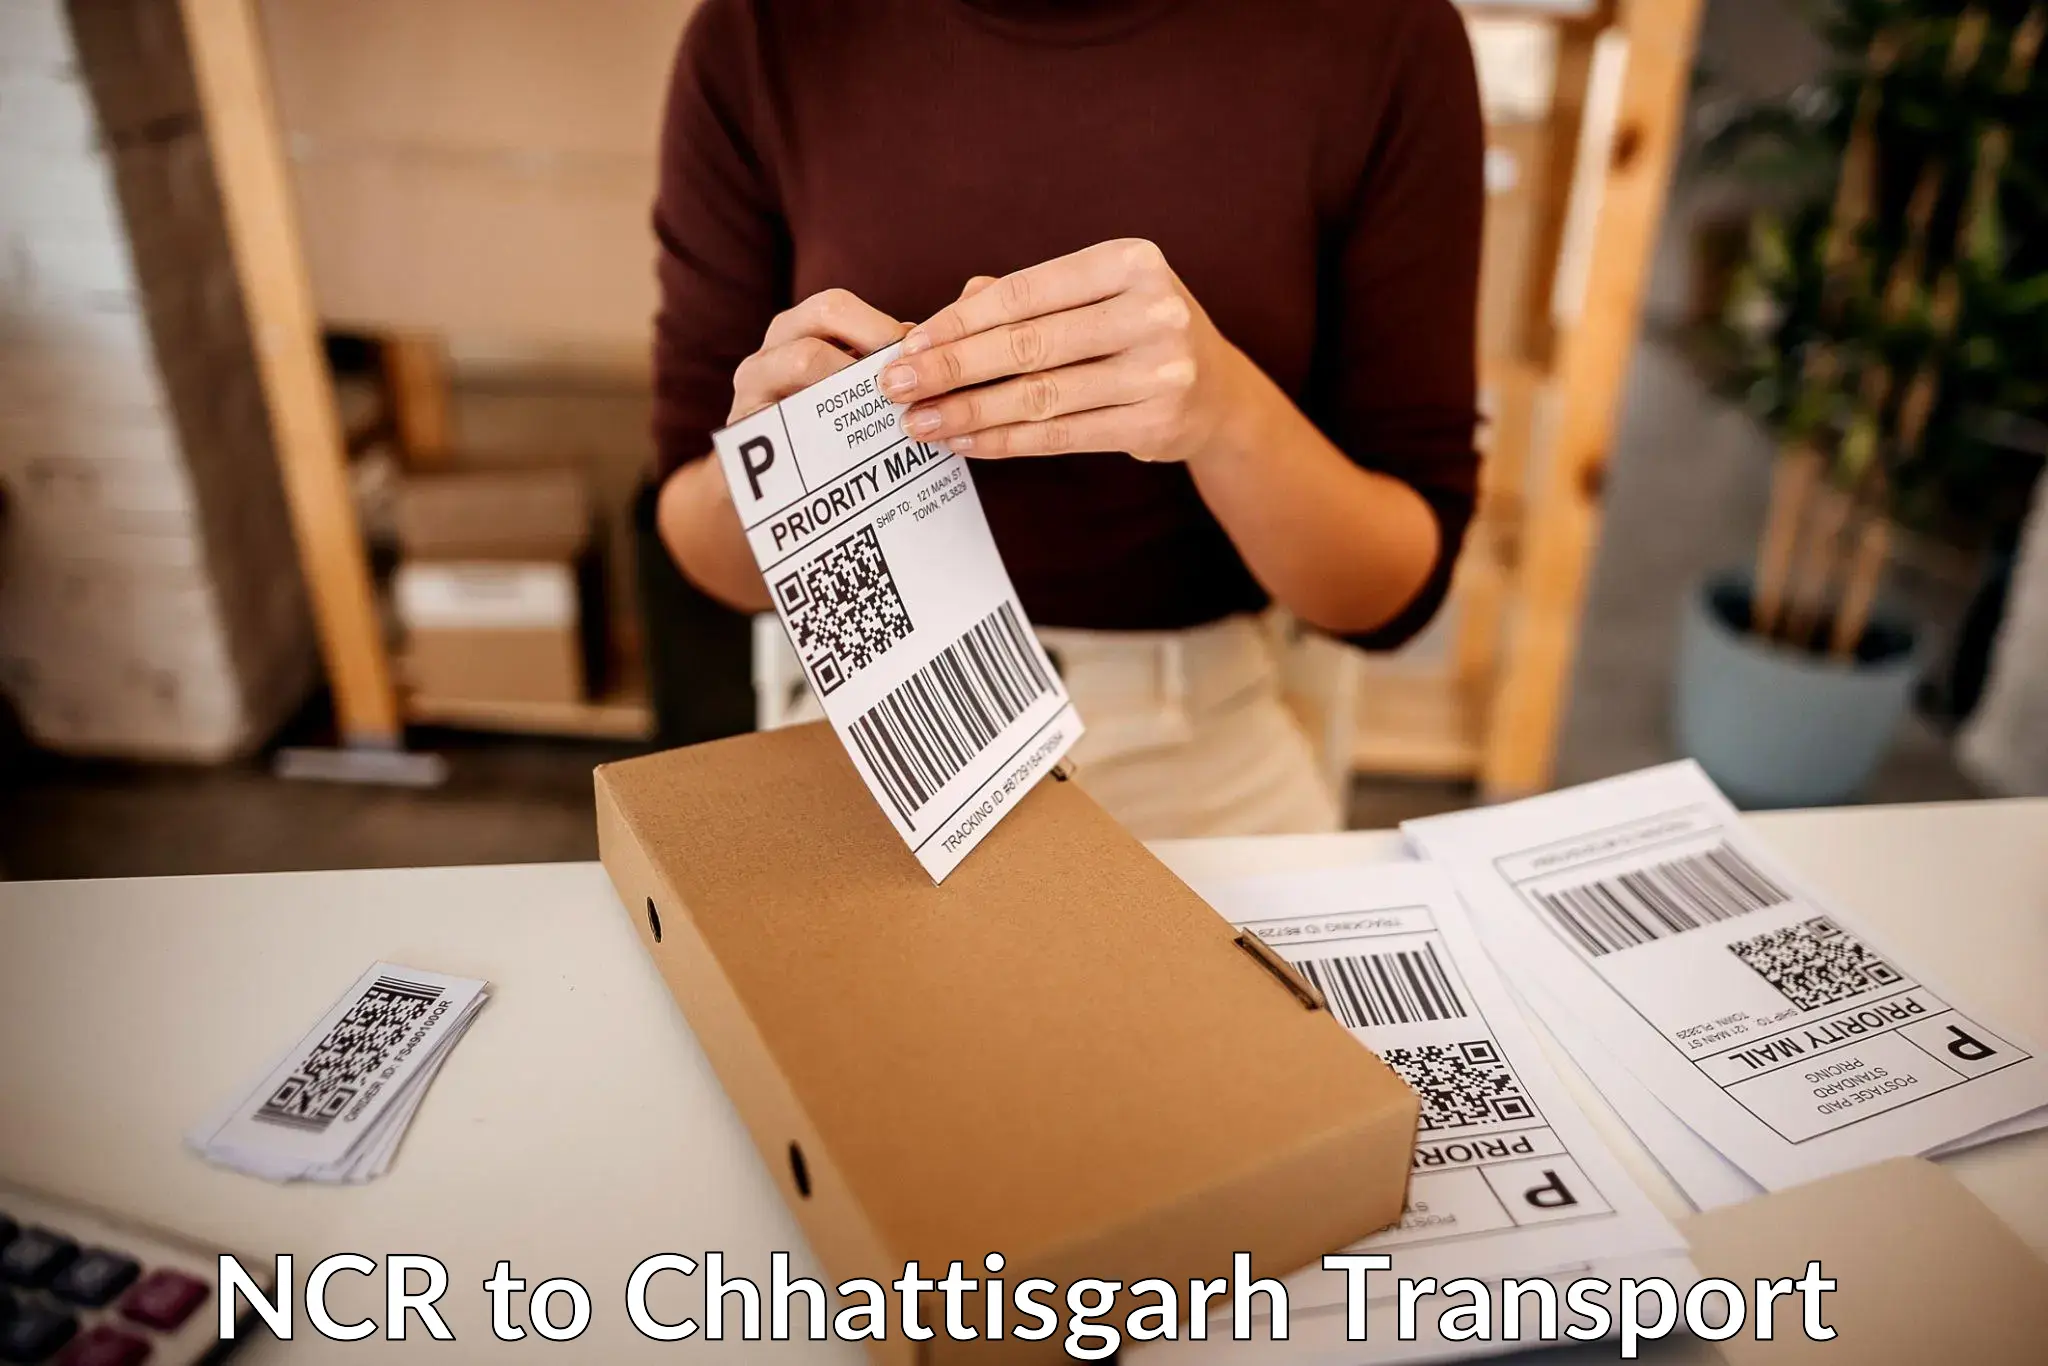 Lorry transport service NCR to Patna Chhattisgarh